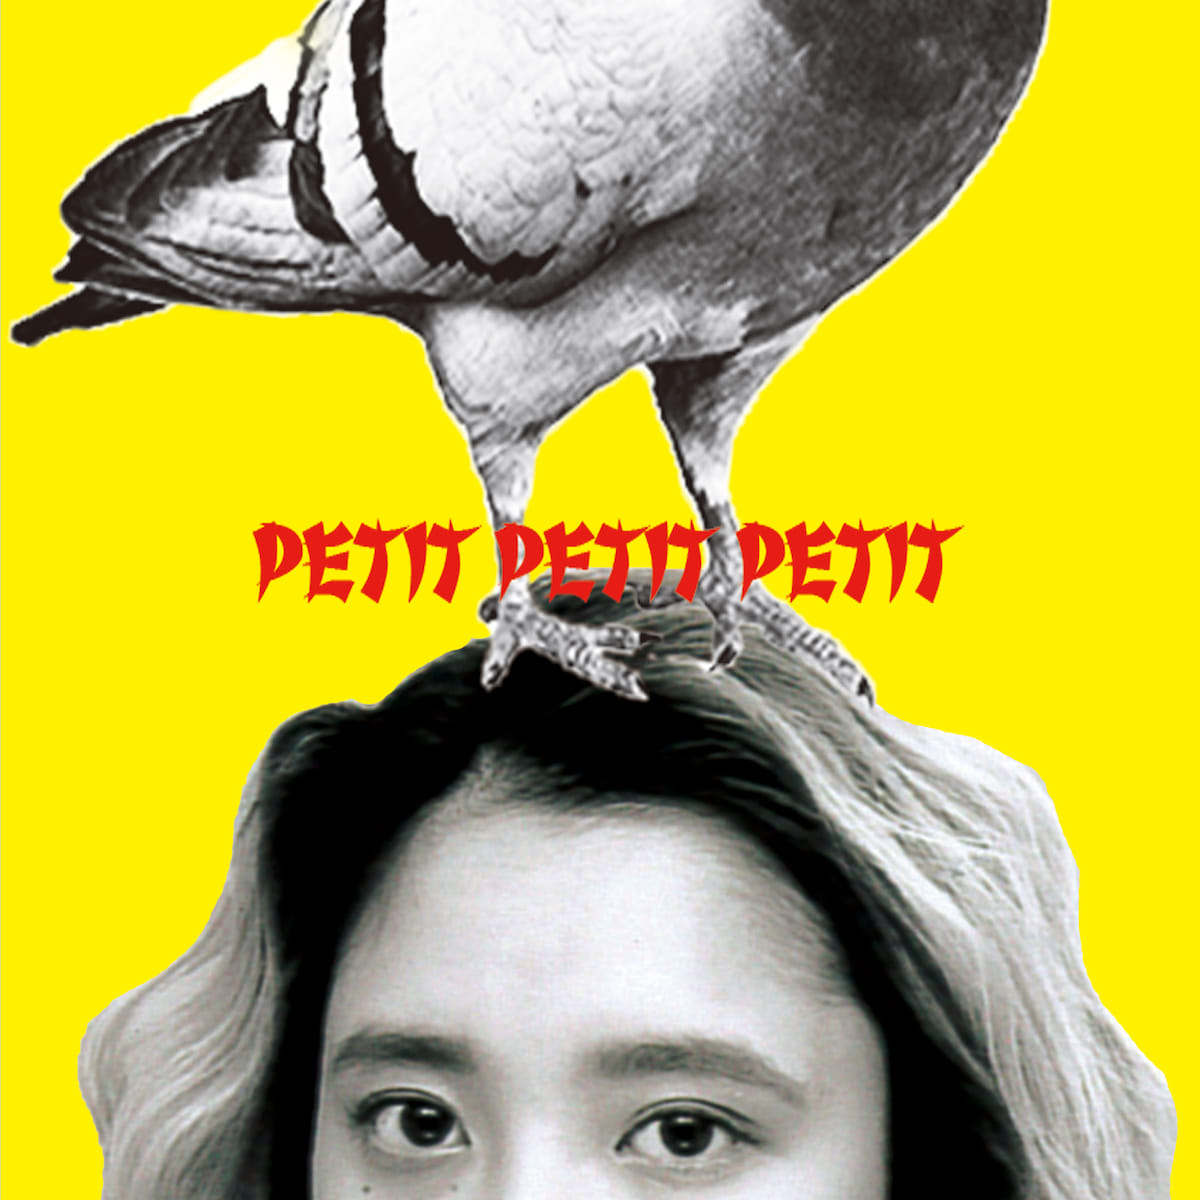 ZOMBIE-CHANGが初の全楽曲バンドセットによる待望の3rdアルバム『PETIT PETIT PETIT』を7月にリリース music180518zombie-chang-2-1200x1200